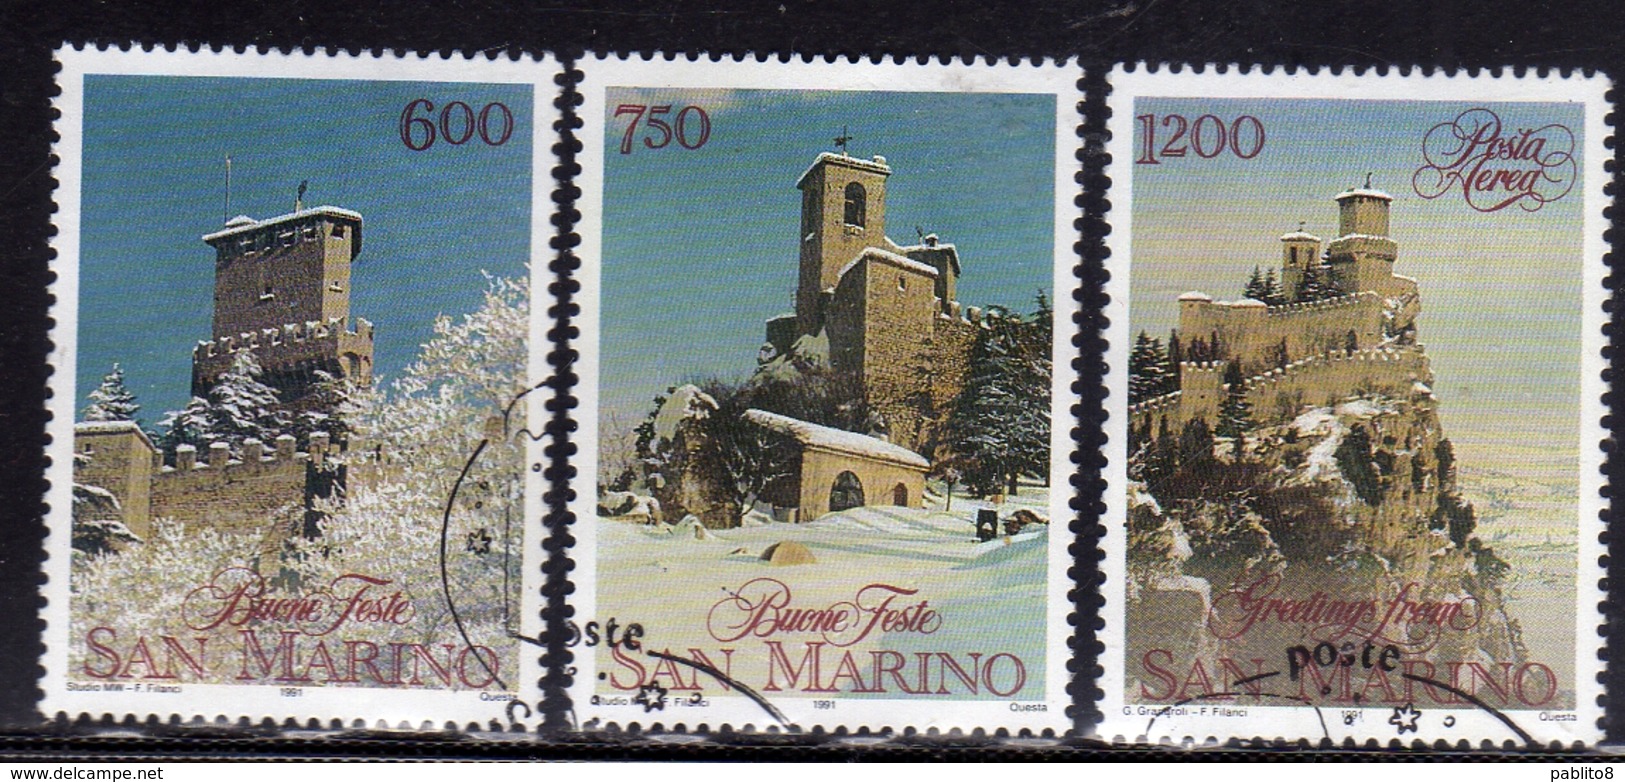 REPUBBLICA DI SAN MARINO 1991 NATALE CHRISTMAS NOEL WEIHNACHTEN NAVIDAD SERIE COMPLETA USATA USED OBLITERE' - Used Stamps